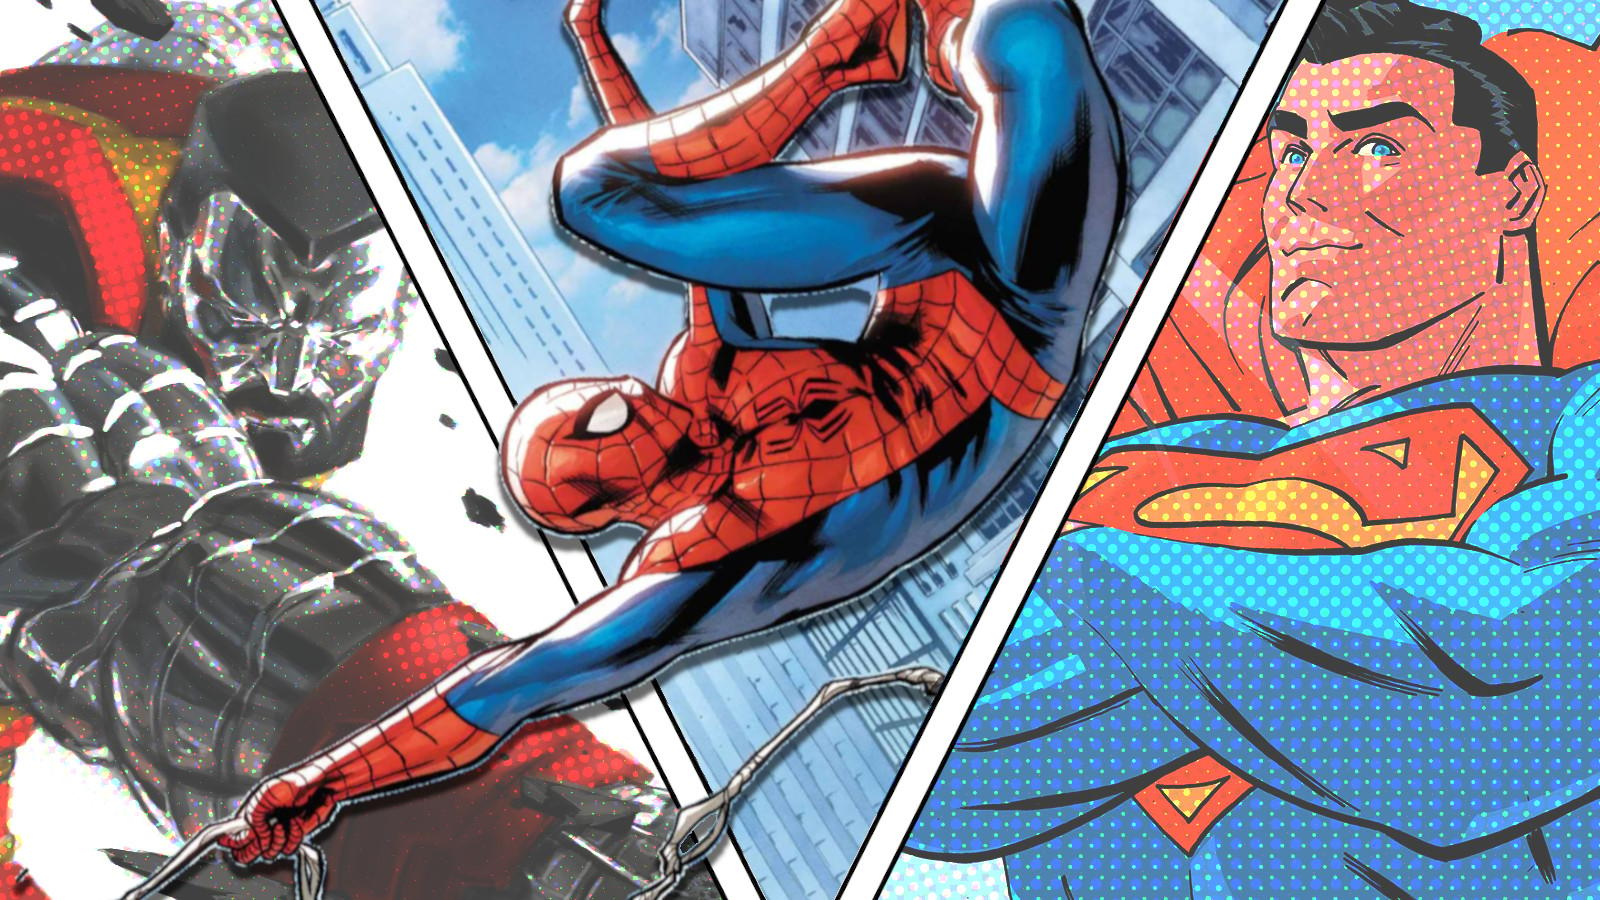 Colossus, Spider-Man, and superman key art